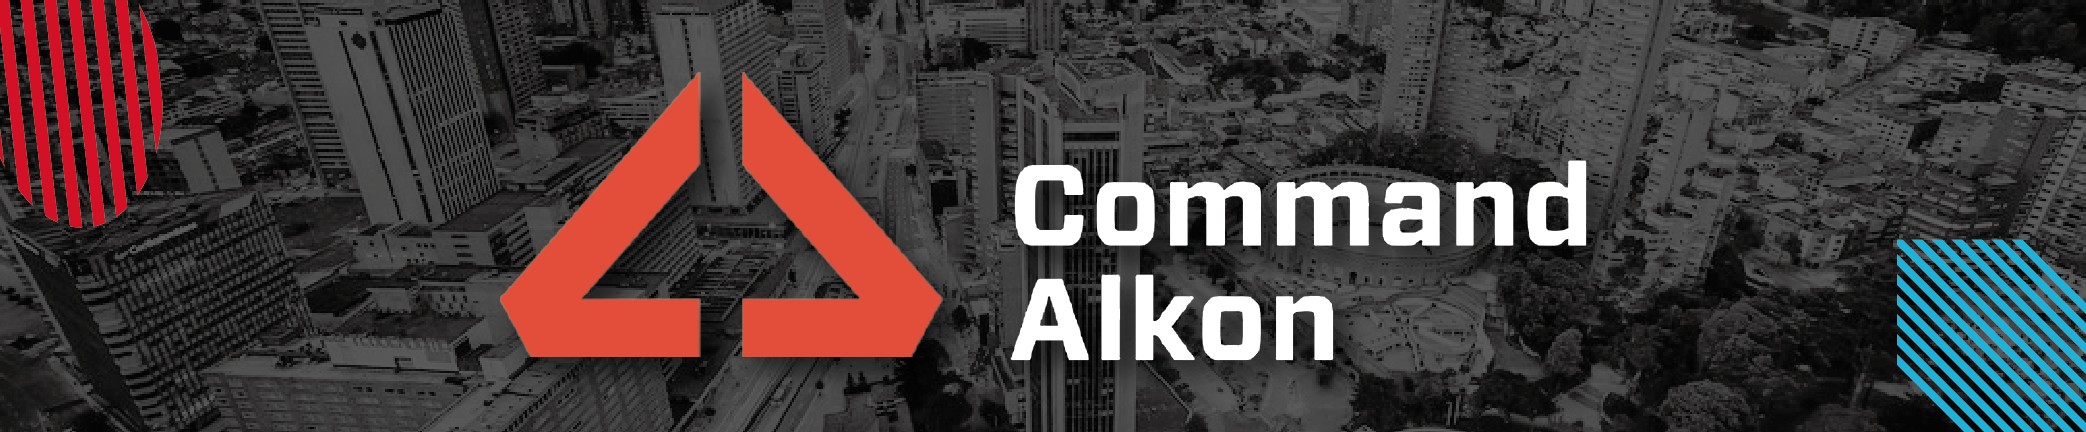 banner-command-alkon